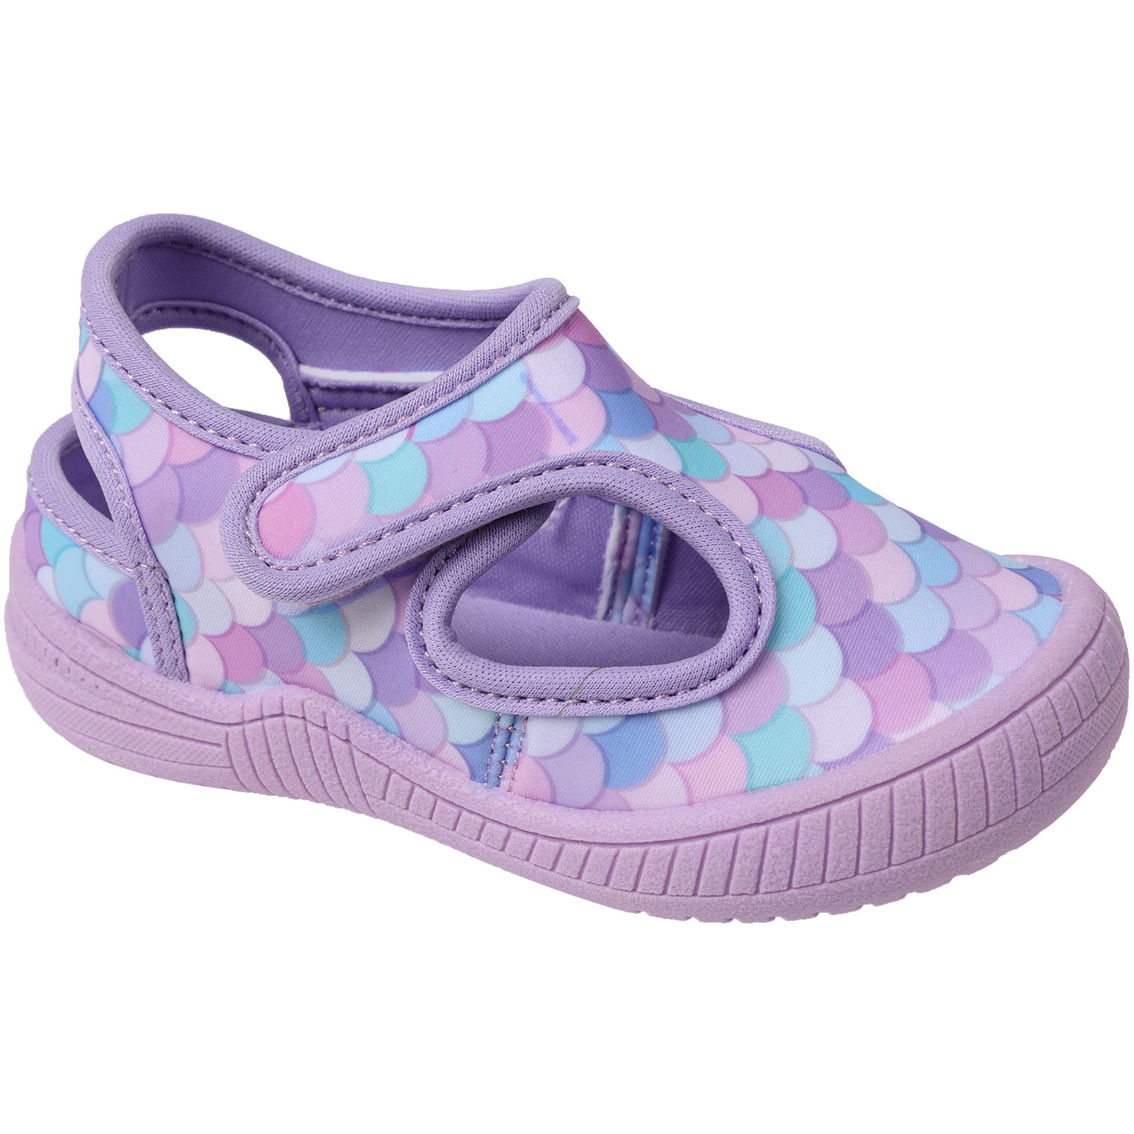 Oomphies Toddler Girls Splash Sandals - Image 2 of 4